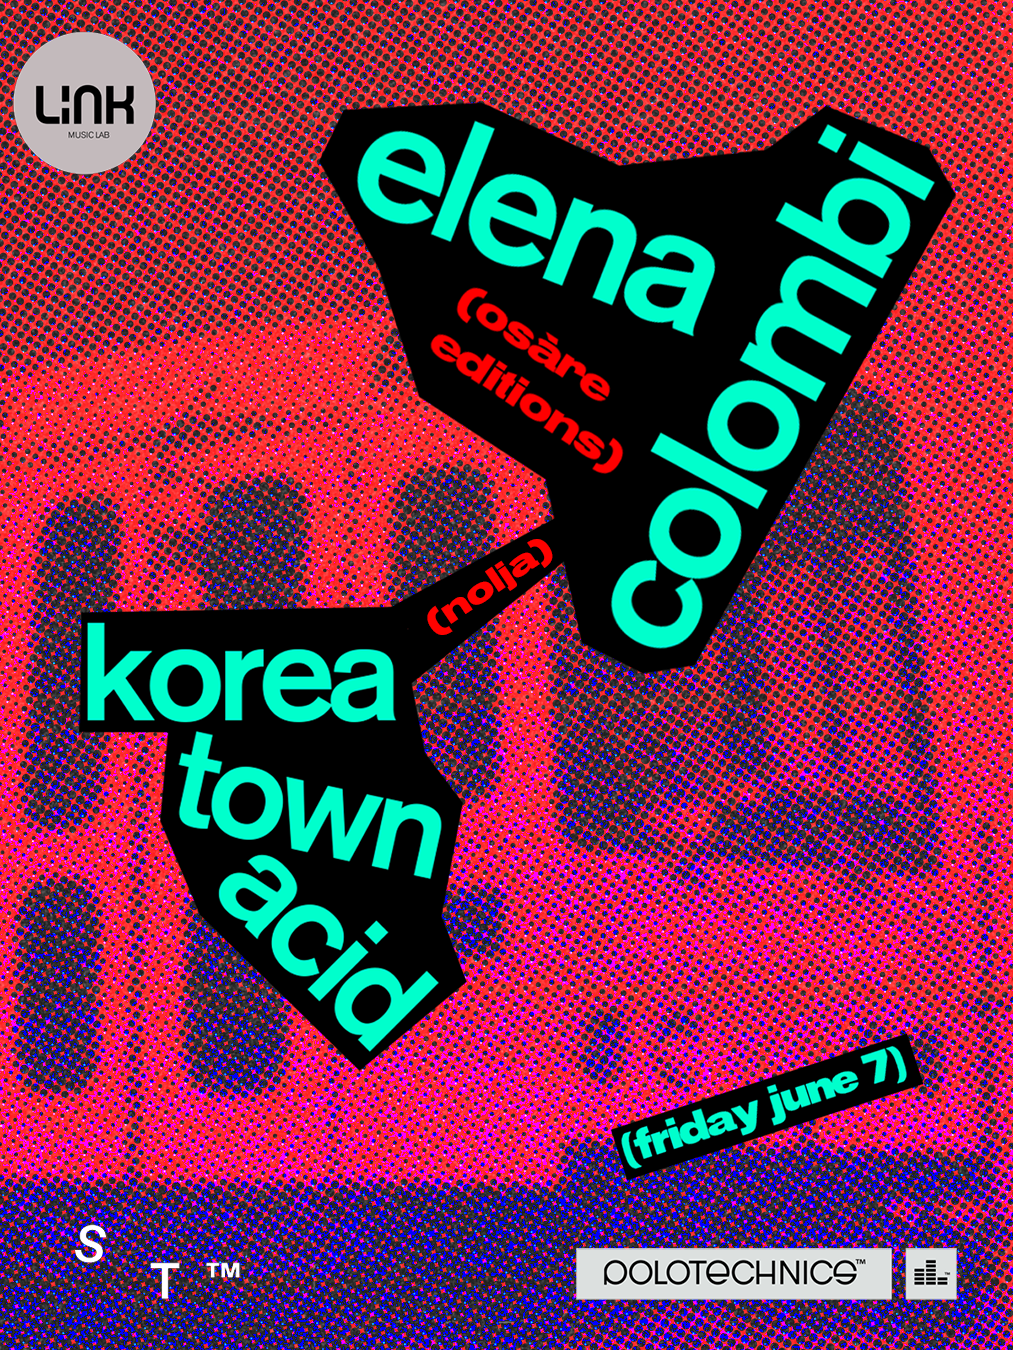 131: Polotechnics featuring Elena Colombi and Korea Town Acid - Página frontal